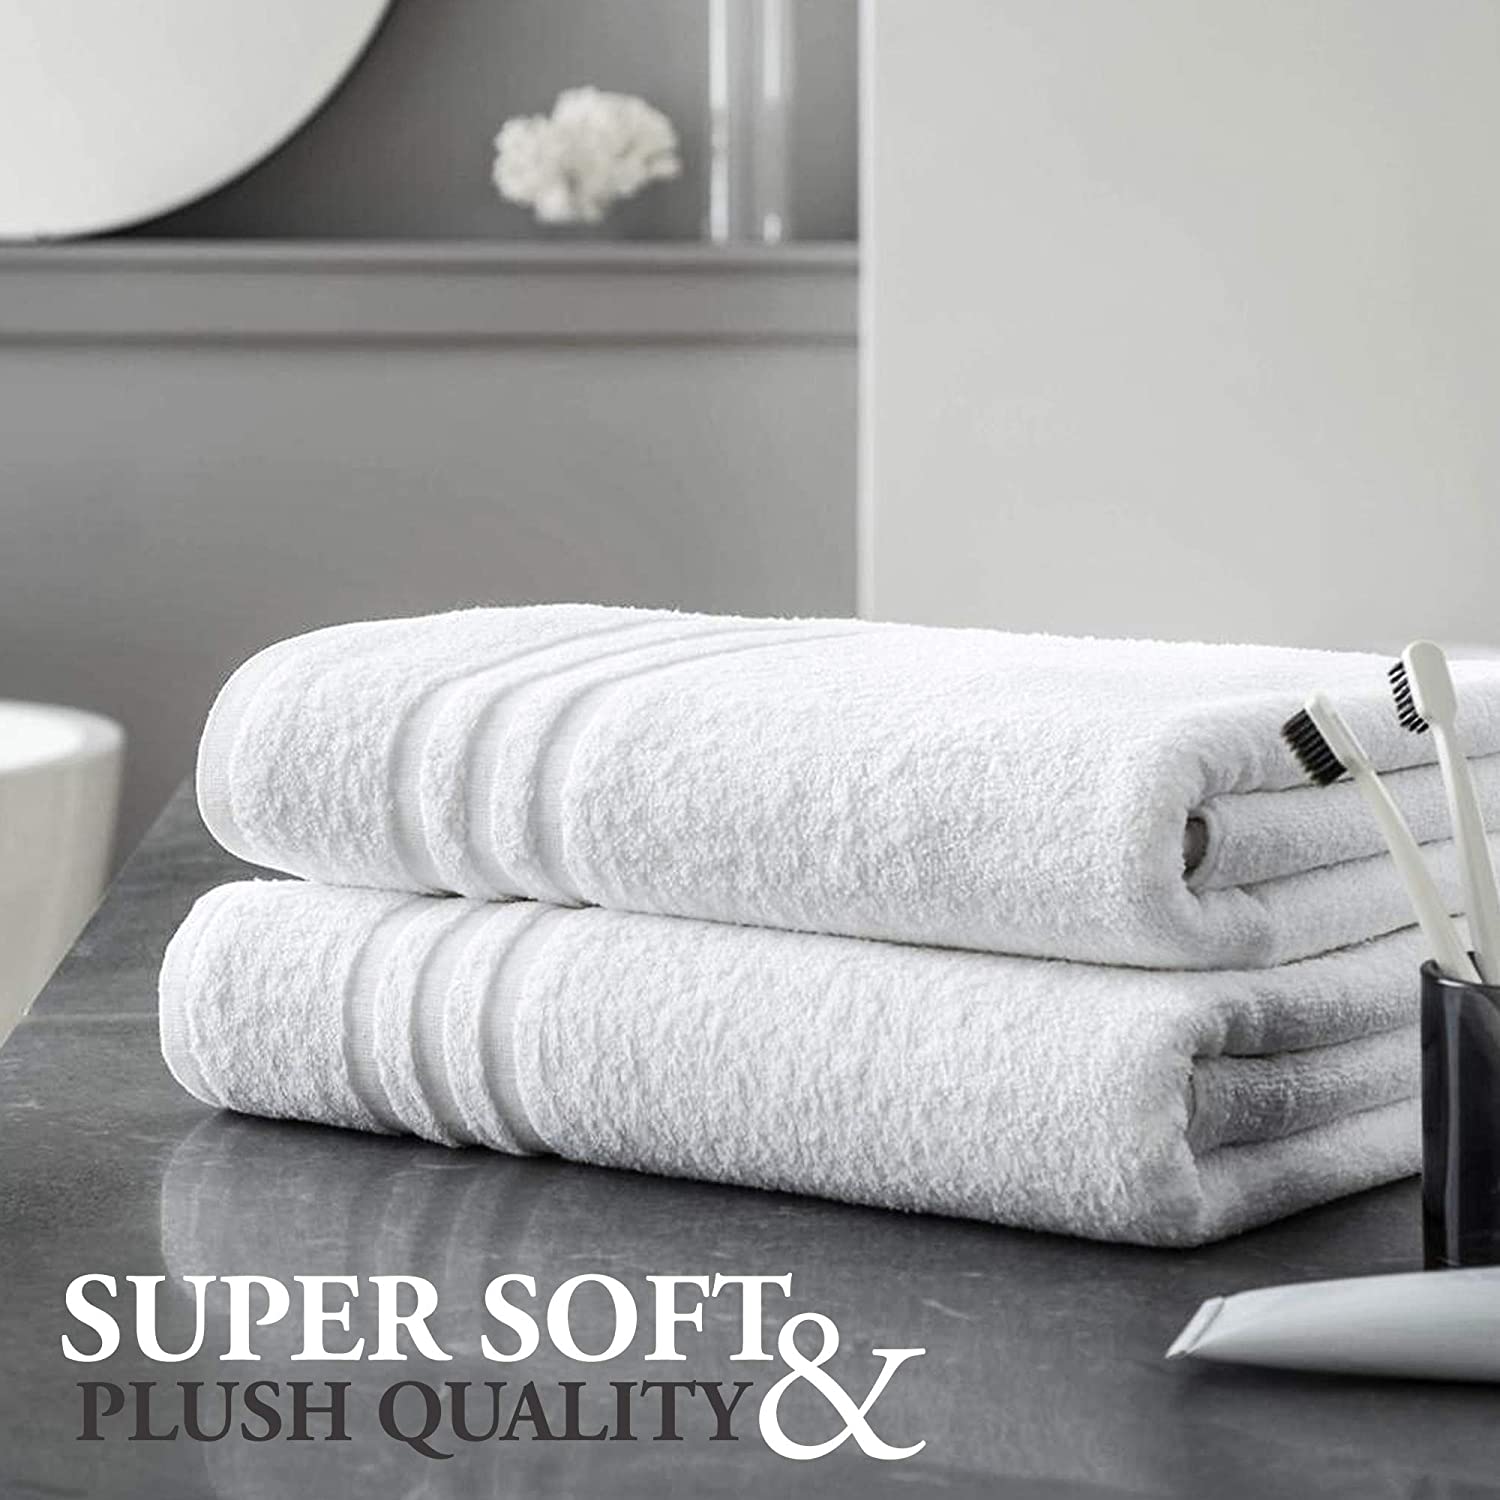 Soft-Skin-Friendly-Towel